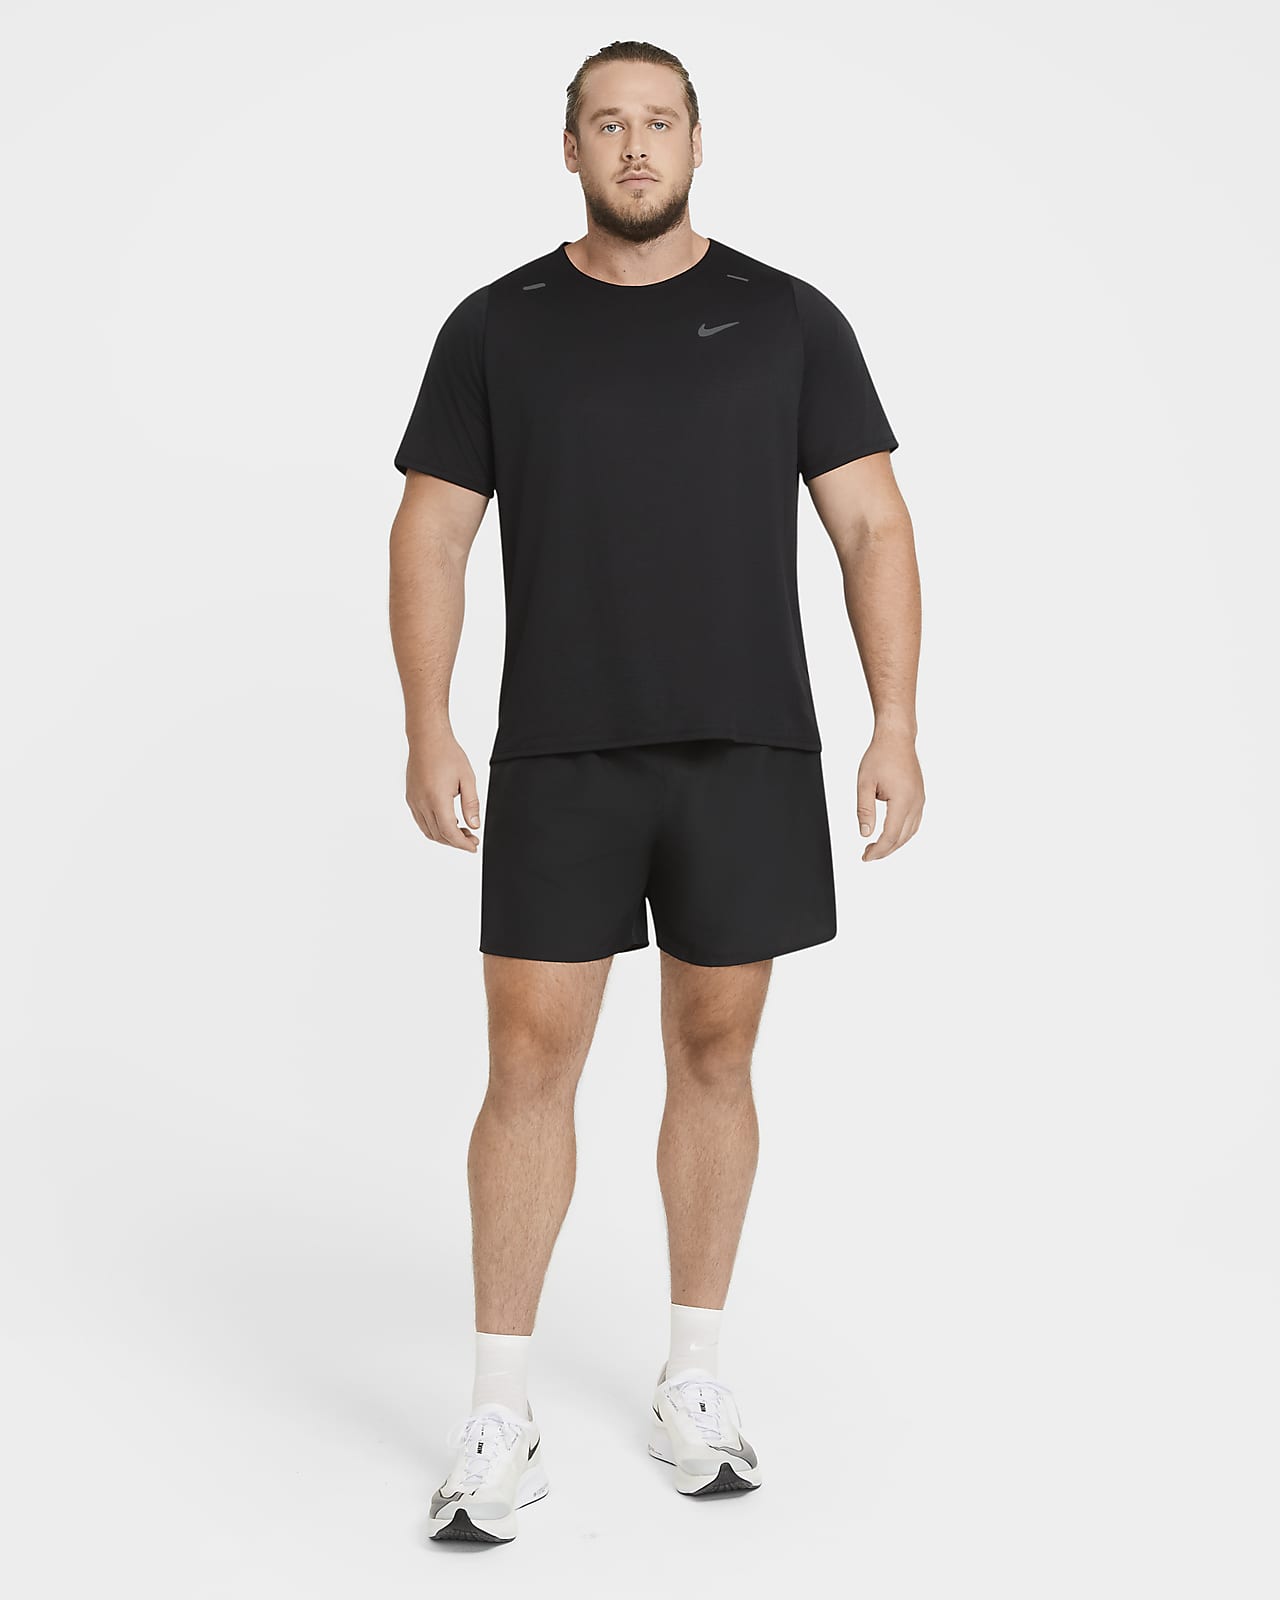 nike grey challenger shorts